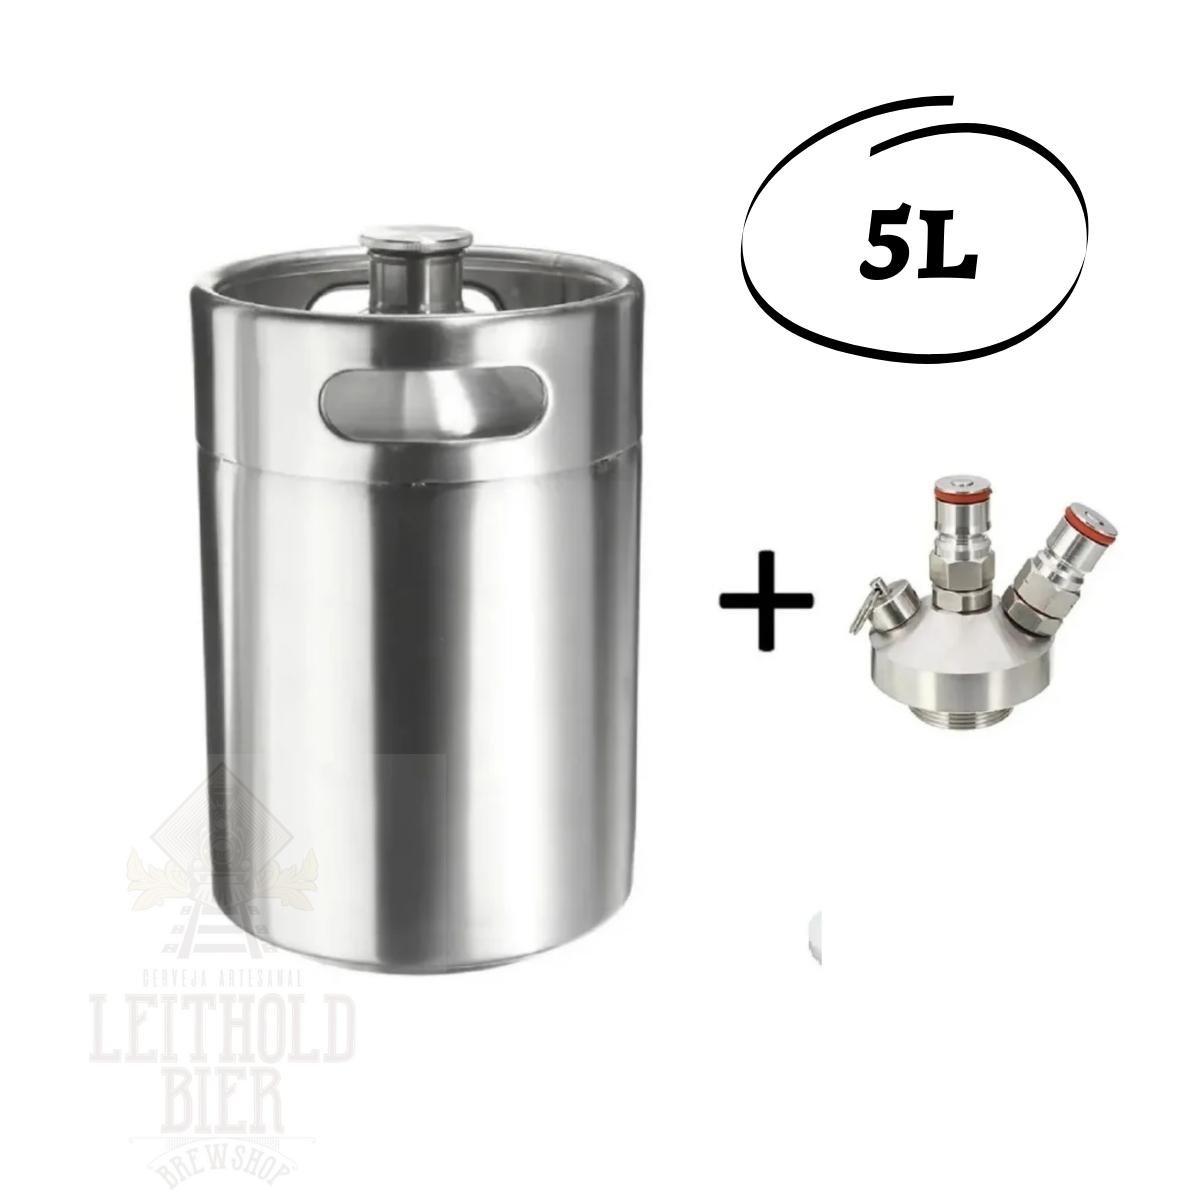 Mini Barril Keg Growler em Inox 5 Litros com tampa ball lock - 1